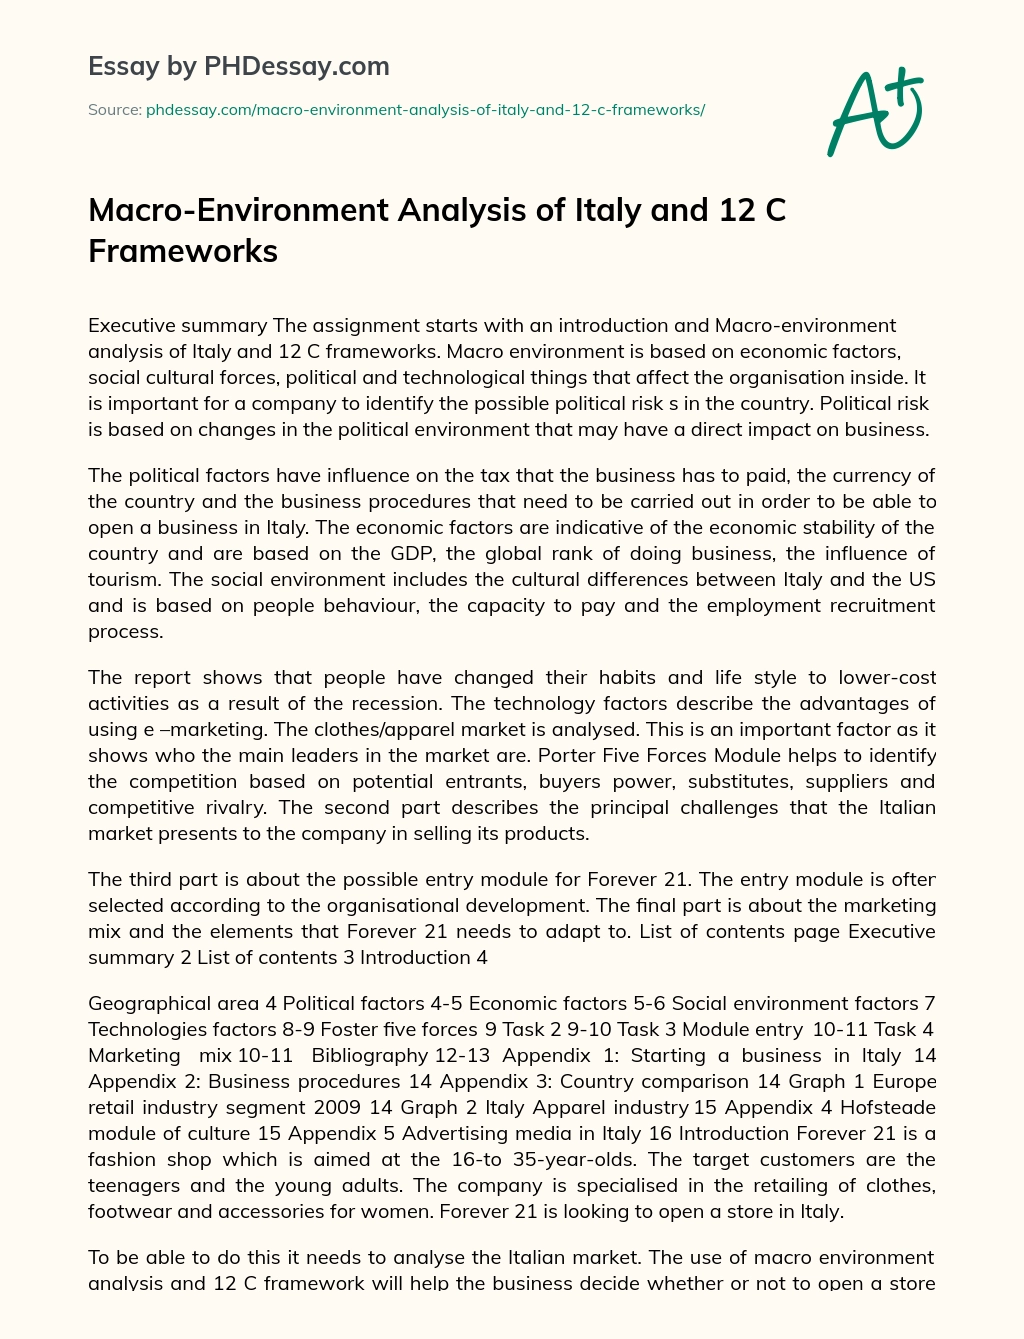 Macro-Environment Analysis of Italy and 12 C Frameworks essay